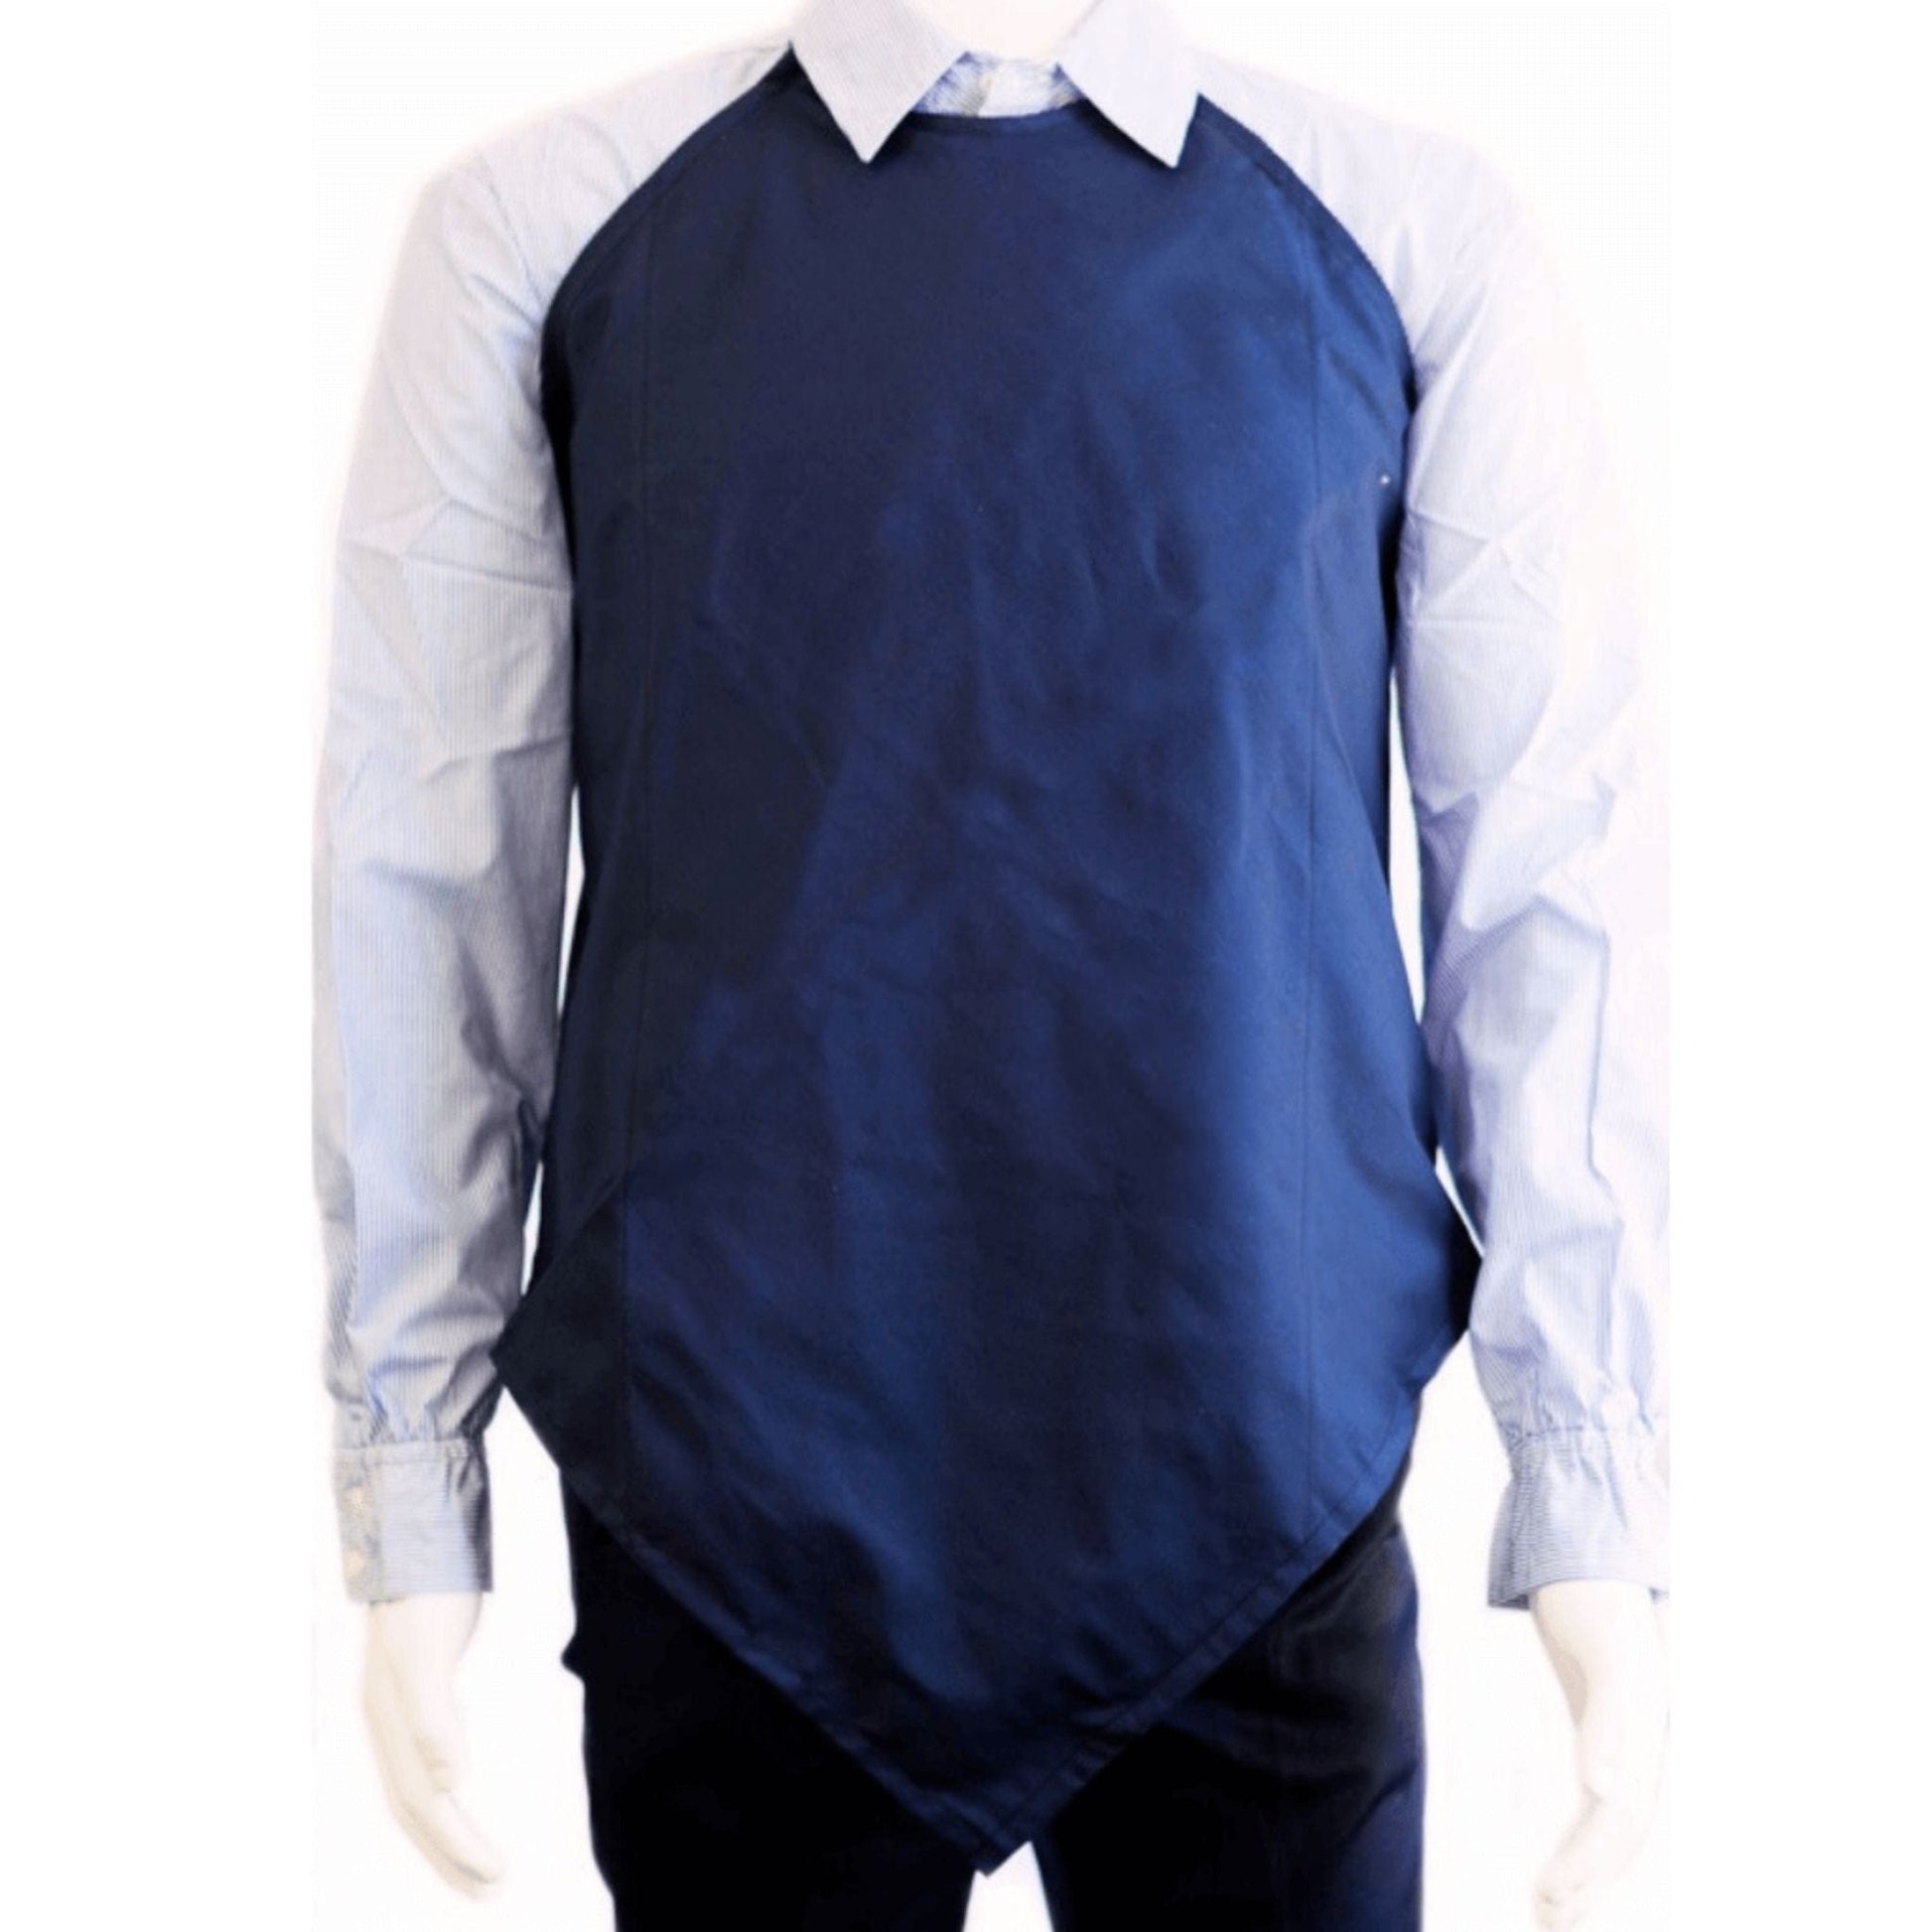 CONC Adult Bib Napkin Style/ Clothing Protector - Caring Clothing